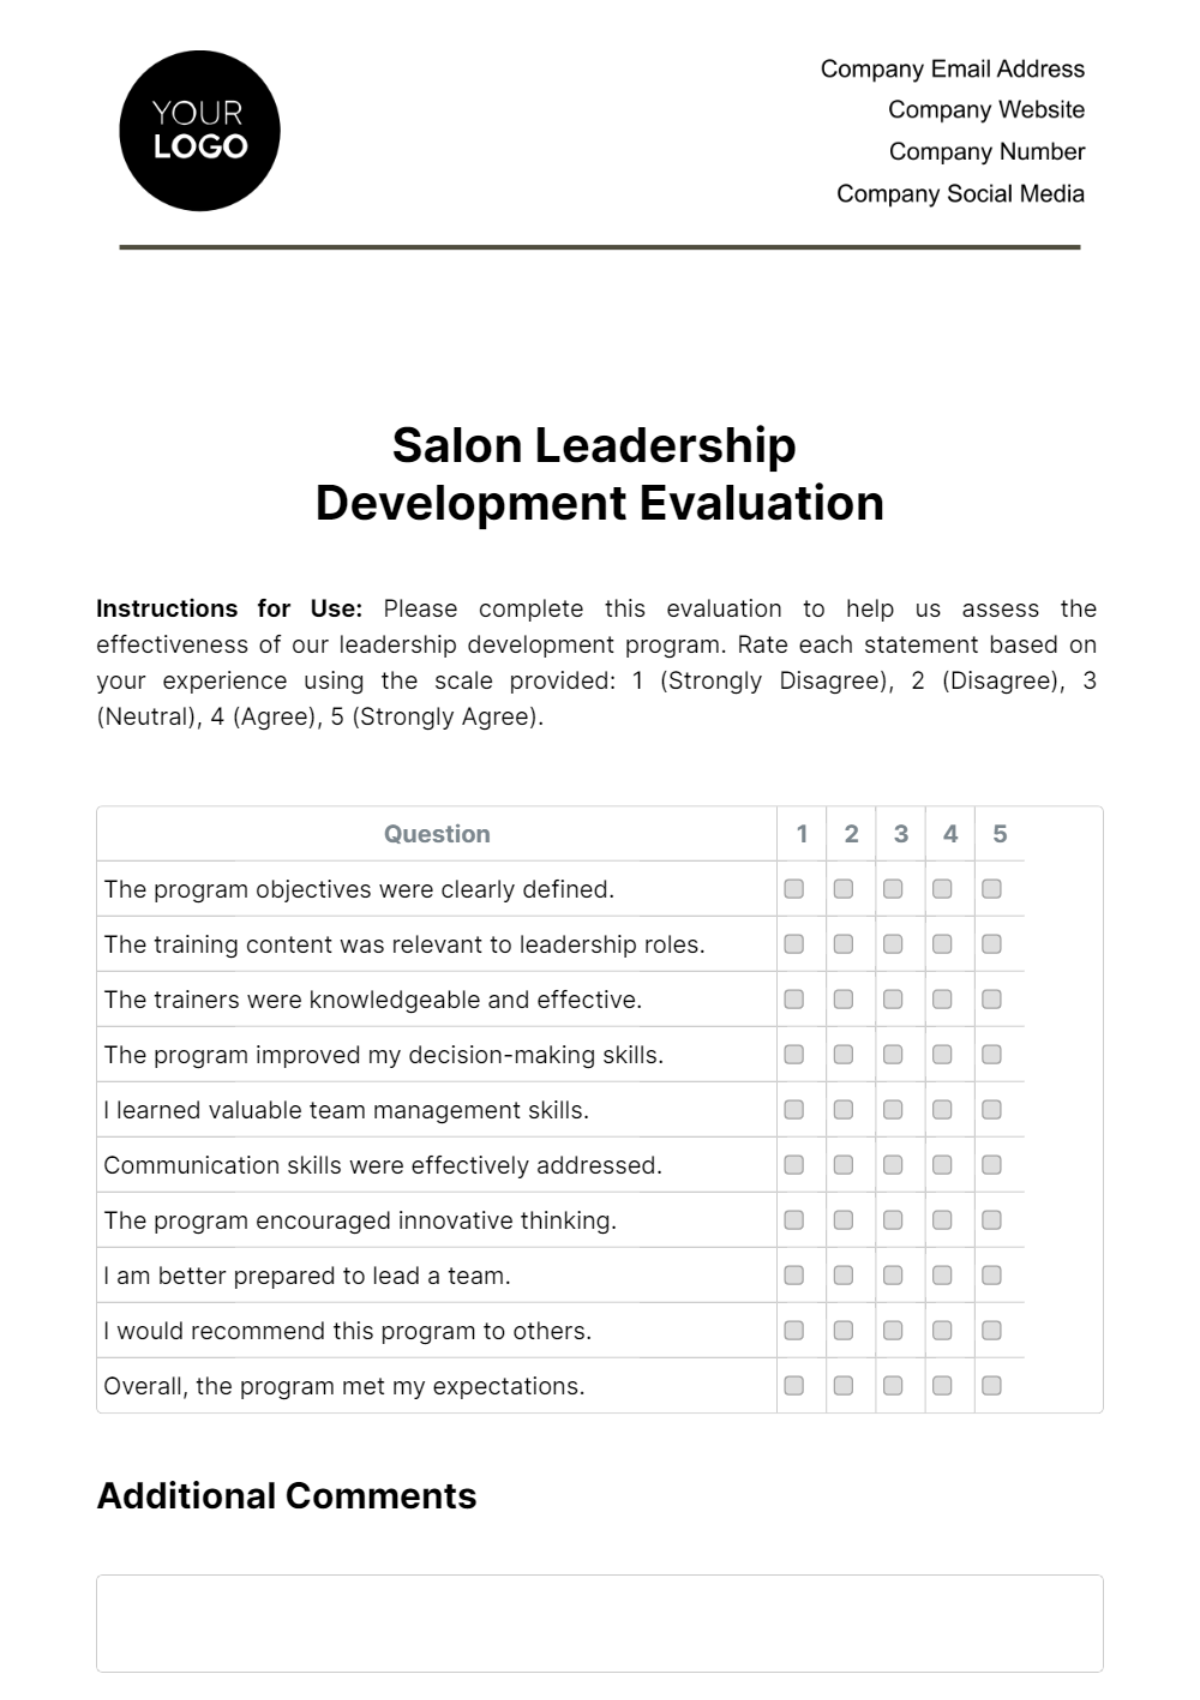 Free Salon Leadership Development Evaluation Template